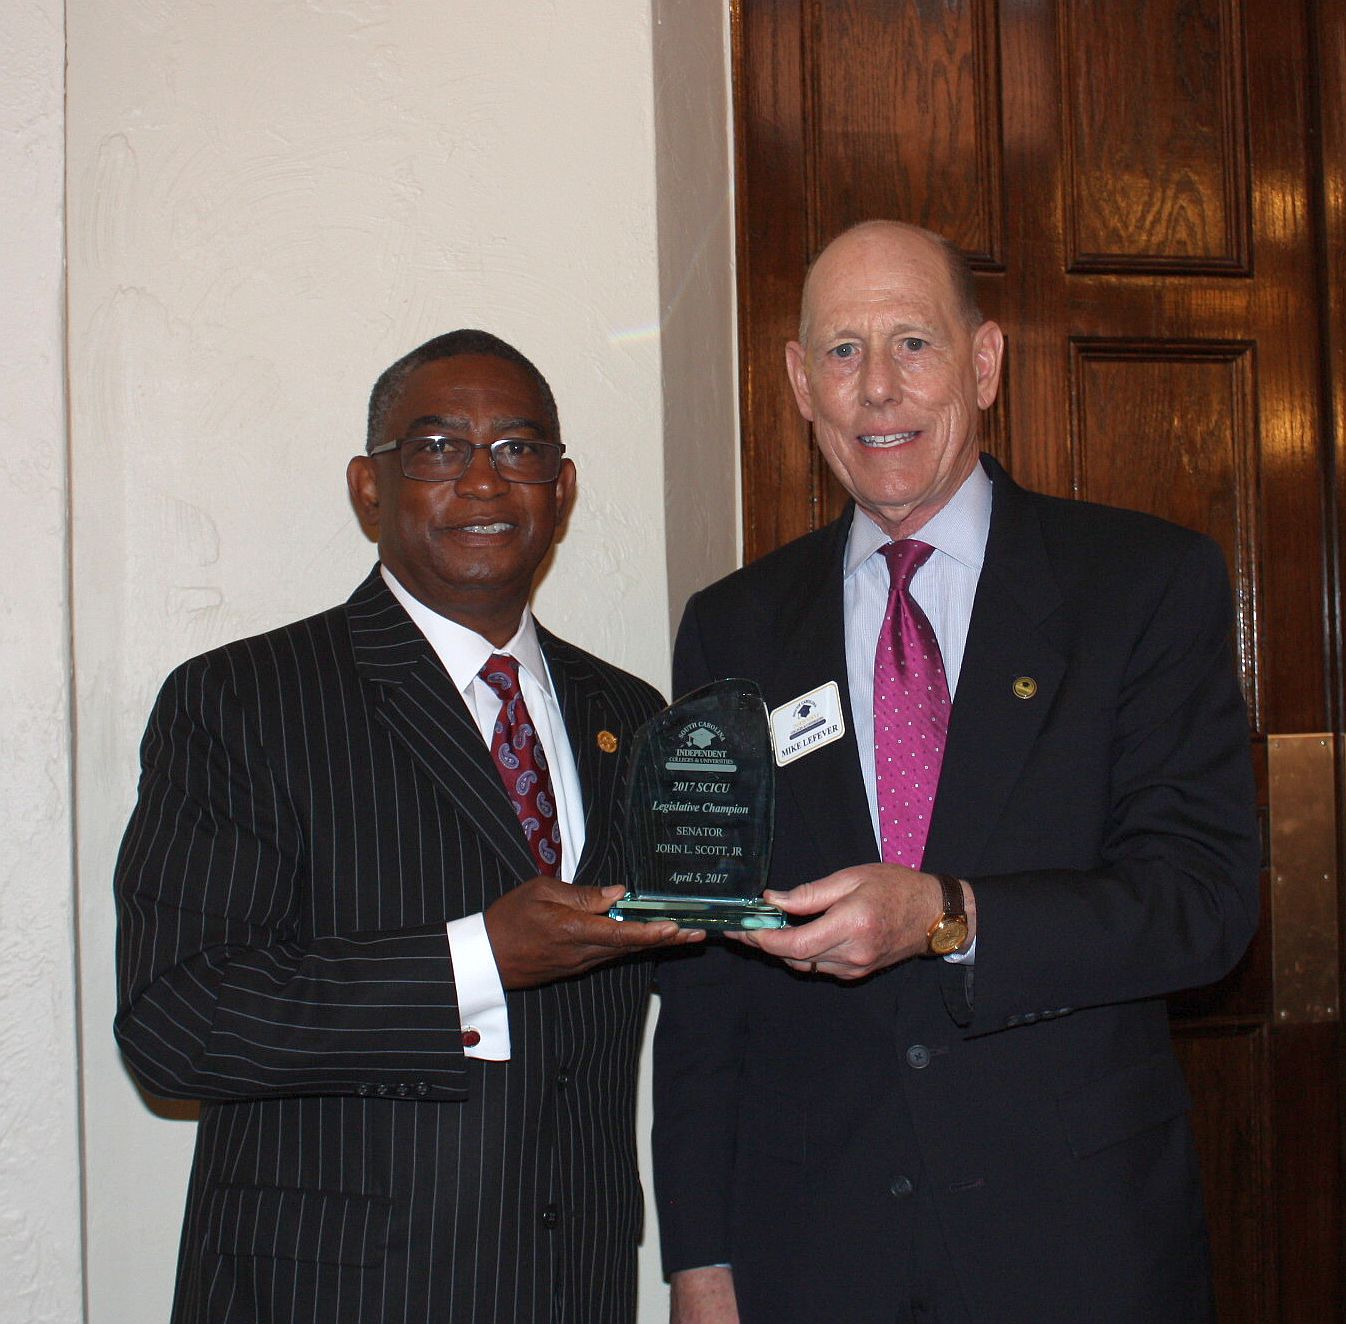 Sen. John L. Scott, Jr. (L) is presented with the SCICU 2017 Legislative Champion Award by SCICU President Mike LeFever (R).